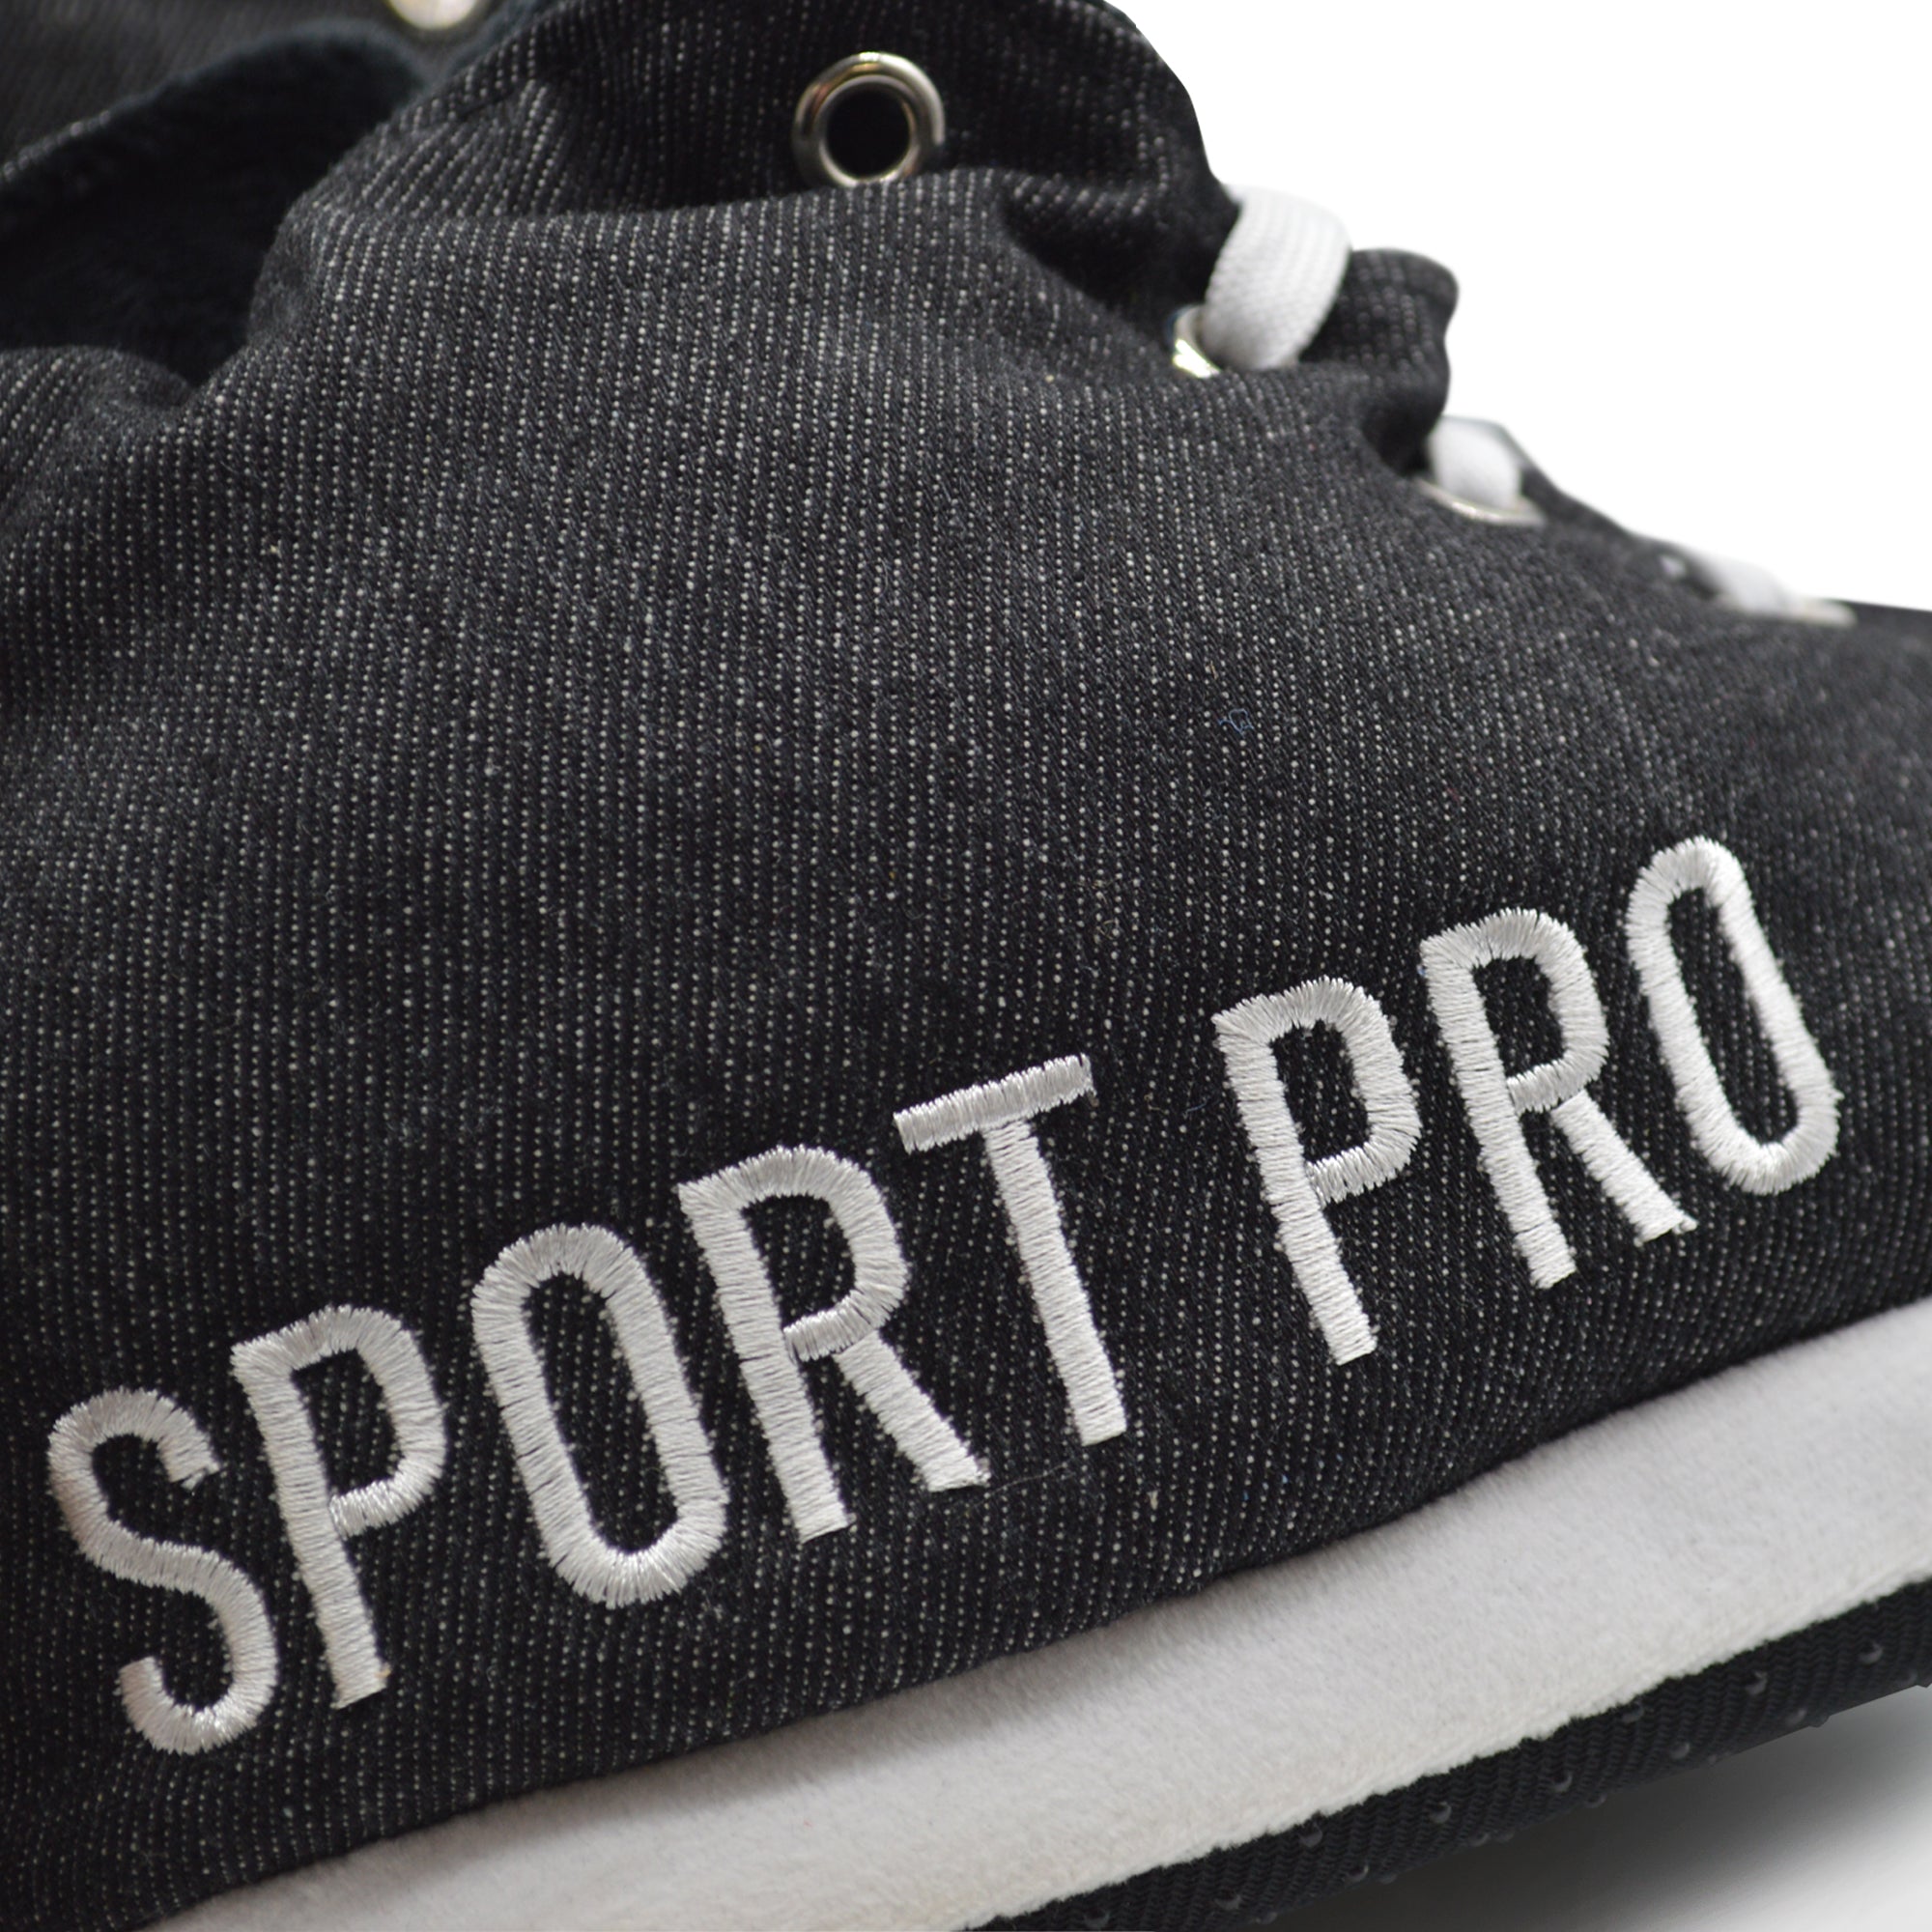 Baffies - Krazy Kicks - Sport Pro - Slippers - Medium